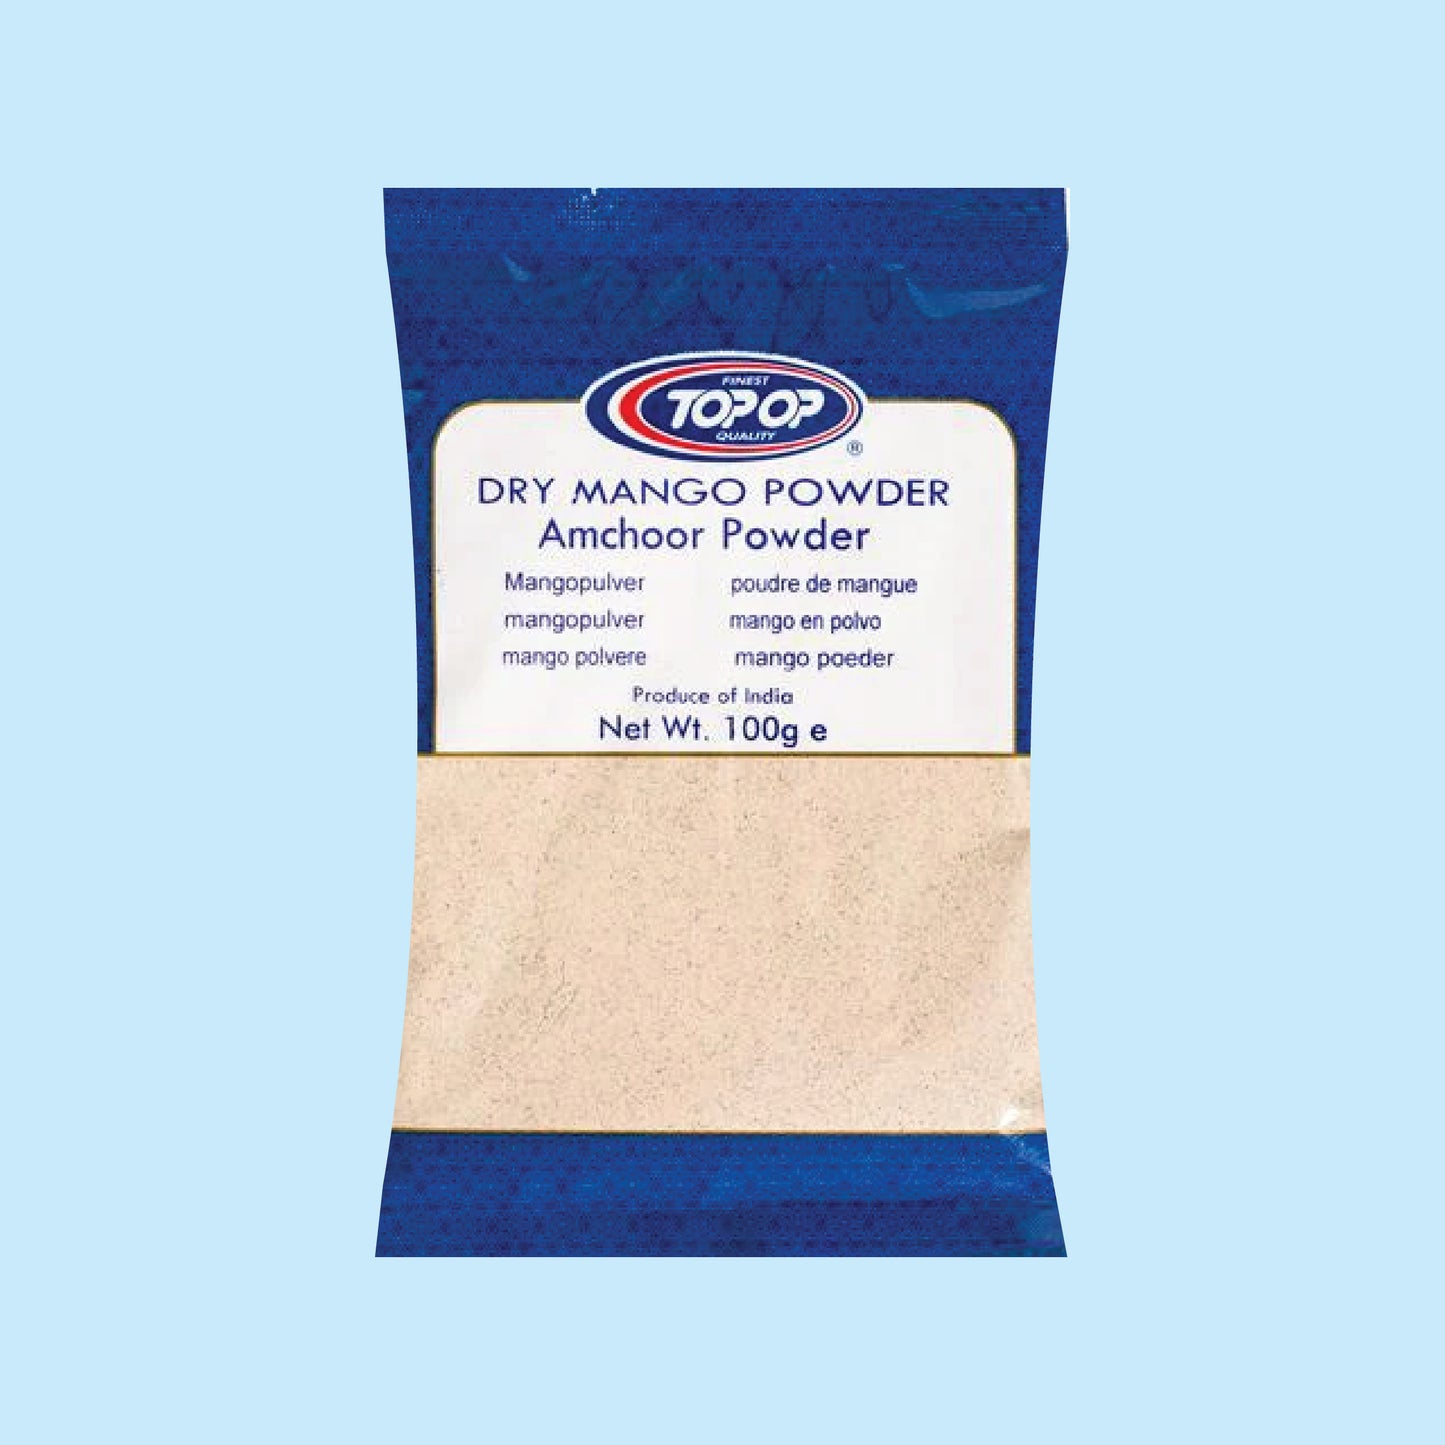 Top-Op Amchoor Powder (Mango Powder) 100g